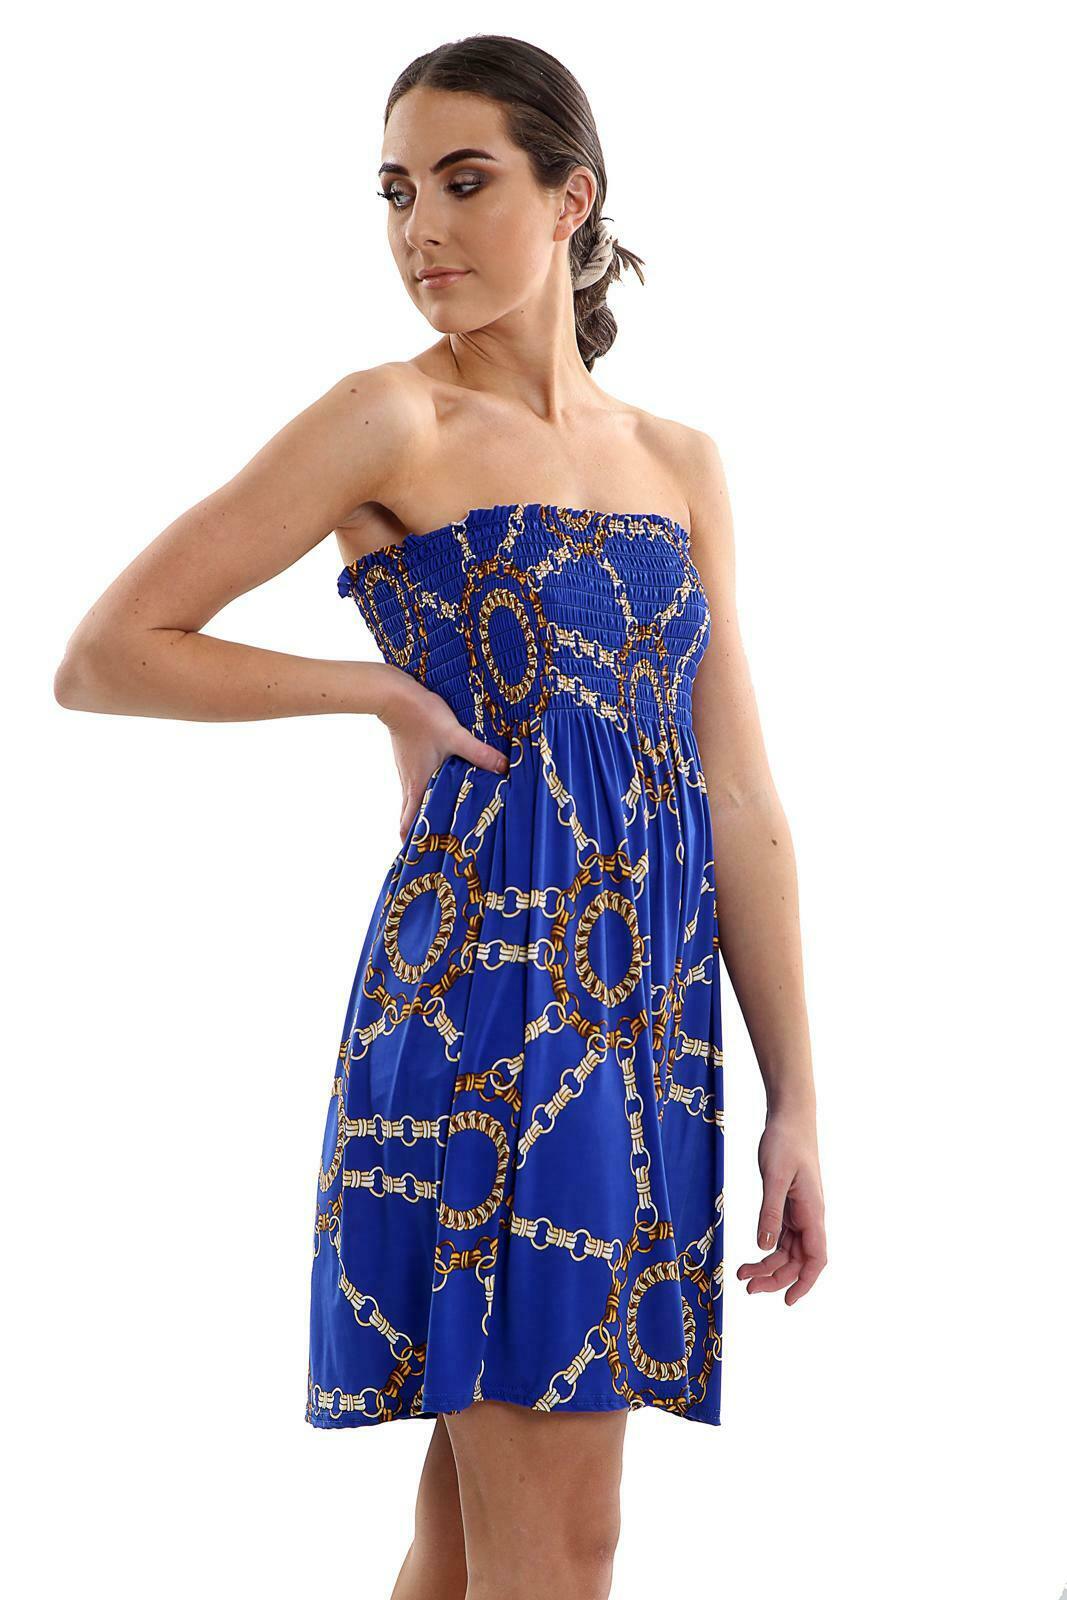 Ladies Royal Blue With Design Boob Tube Short Style Dress.